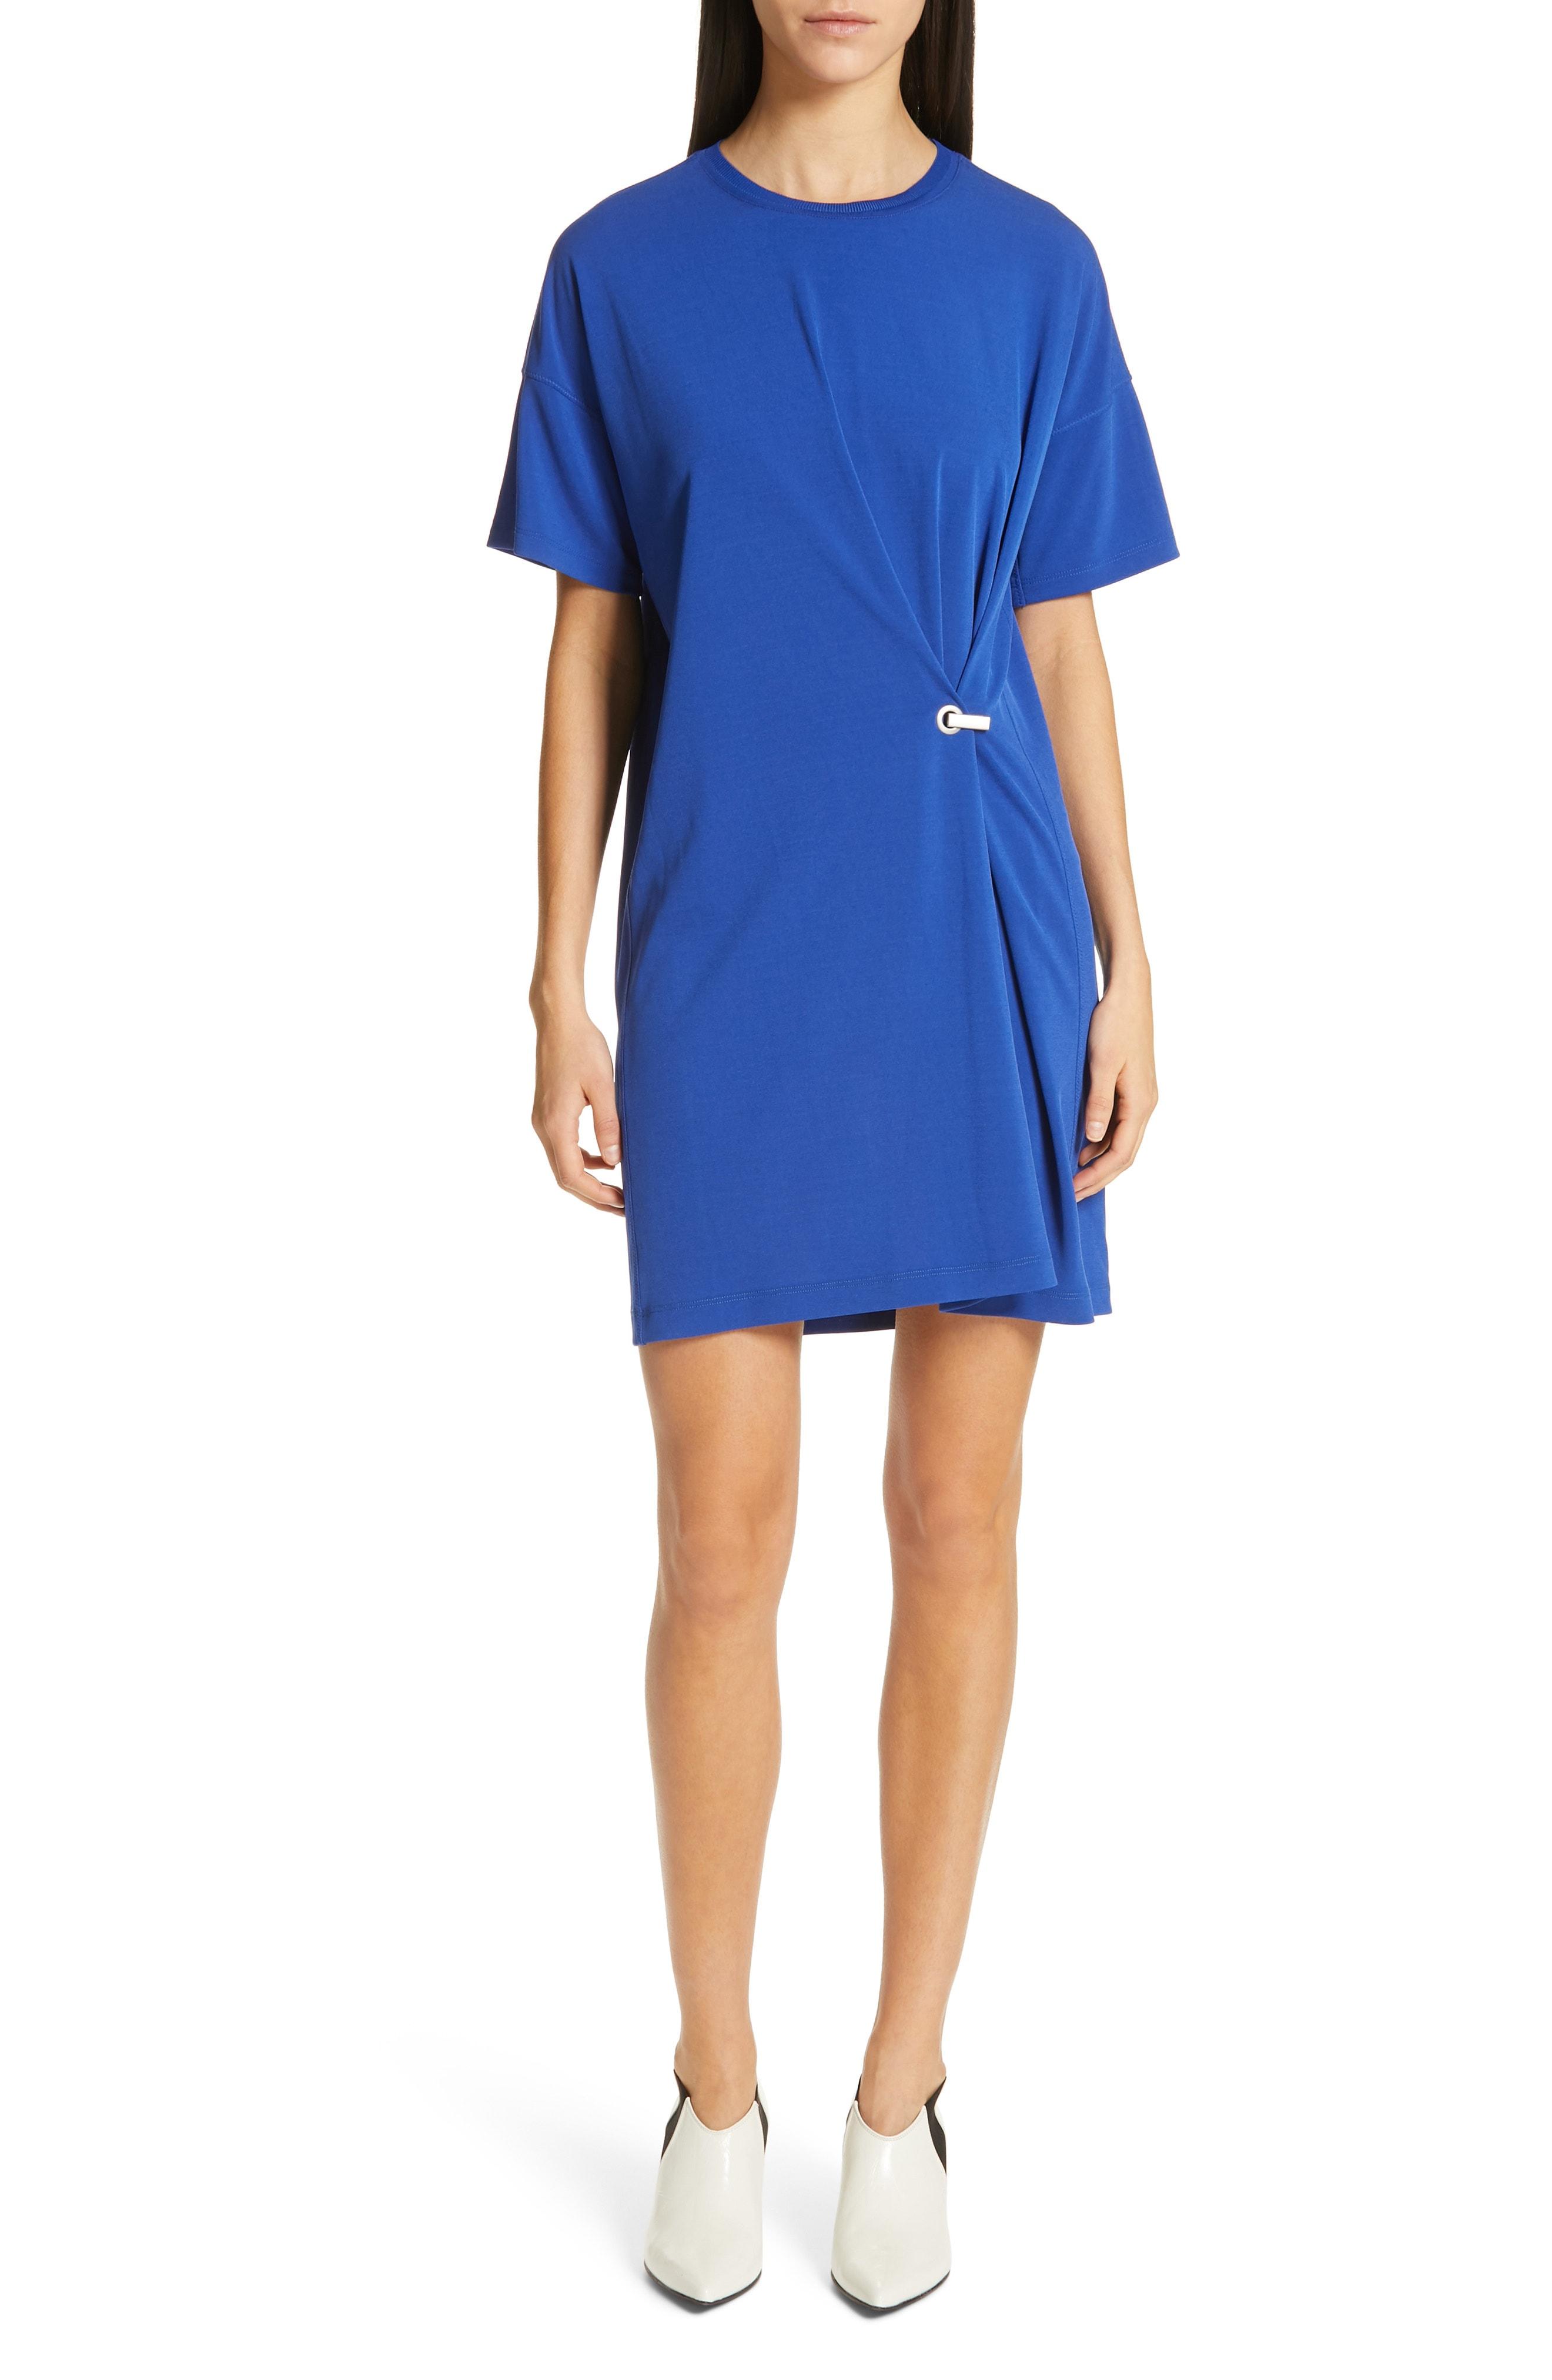 Lyst - Rag & Bone Mitchell Gathered T-shirt Dress in Blue